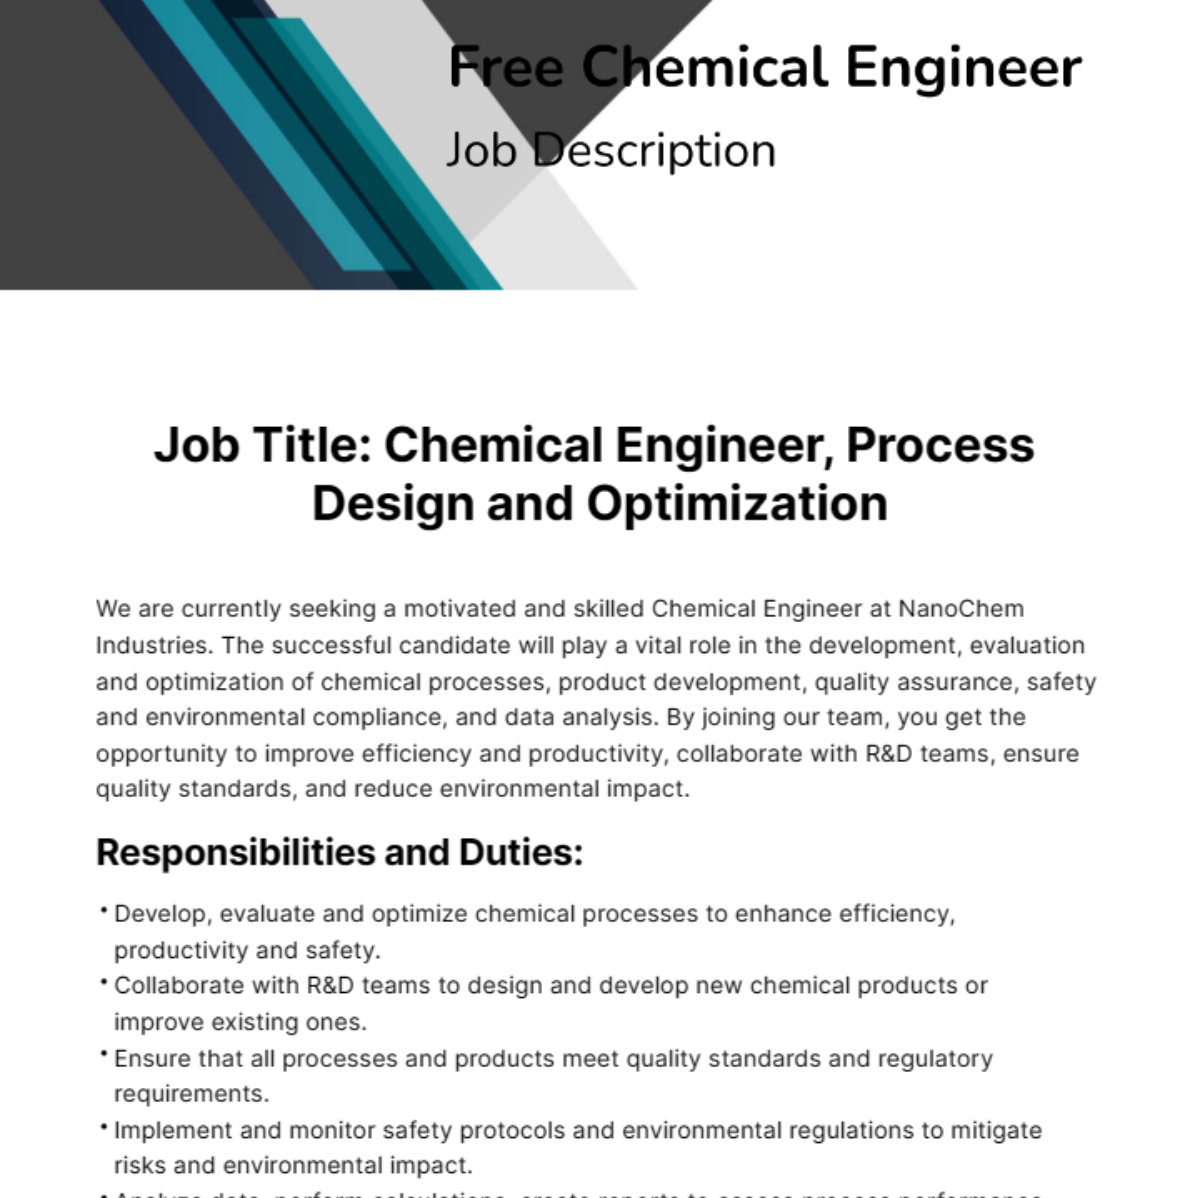 Chemical Engineer Job Description Template - Edit Online & Download ...